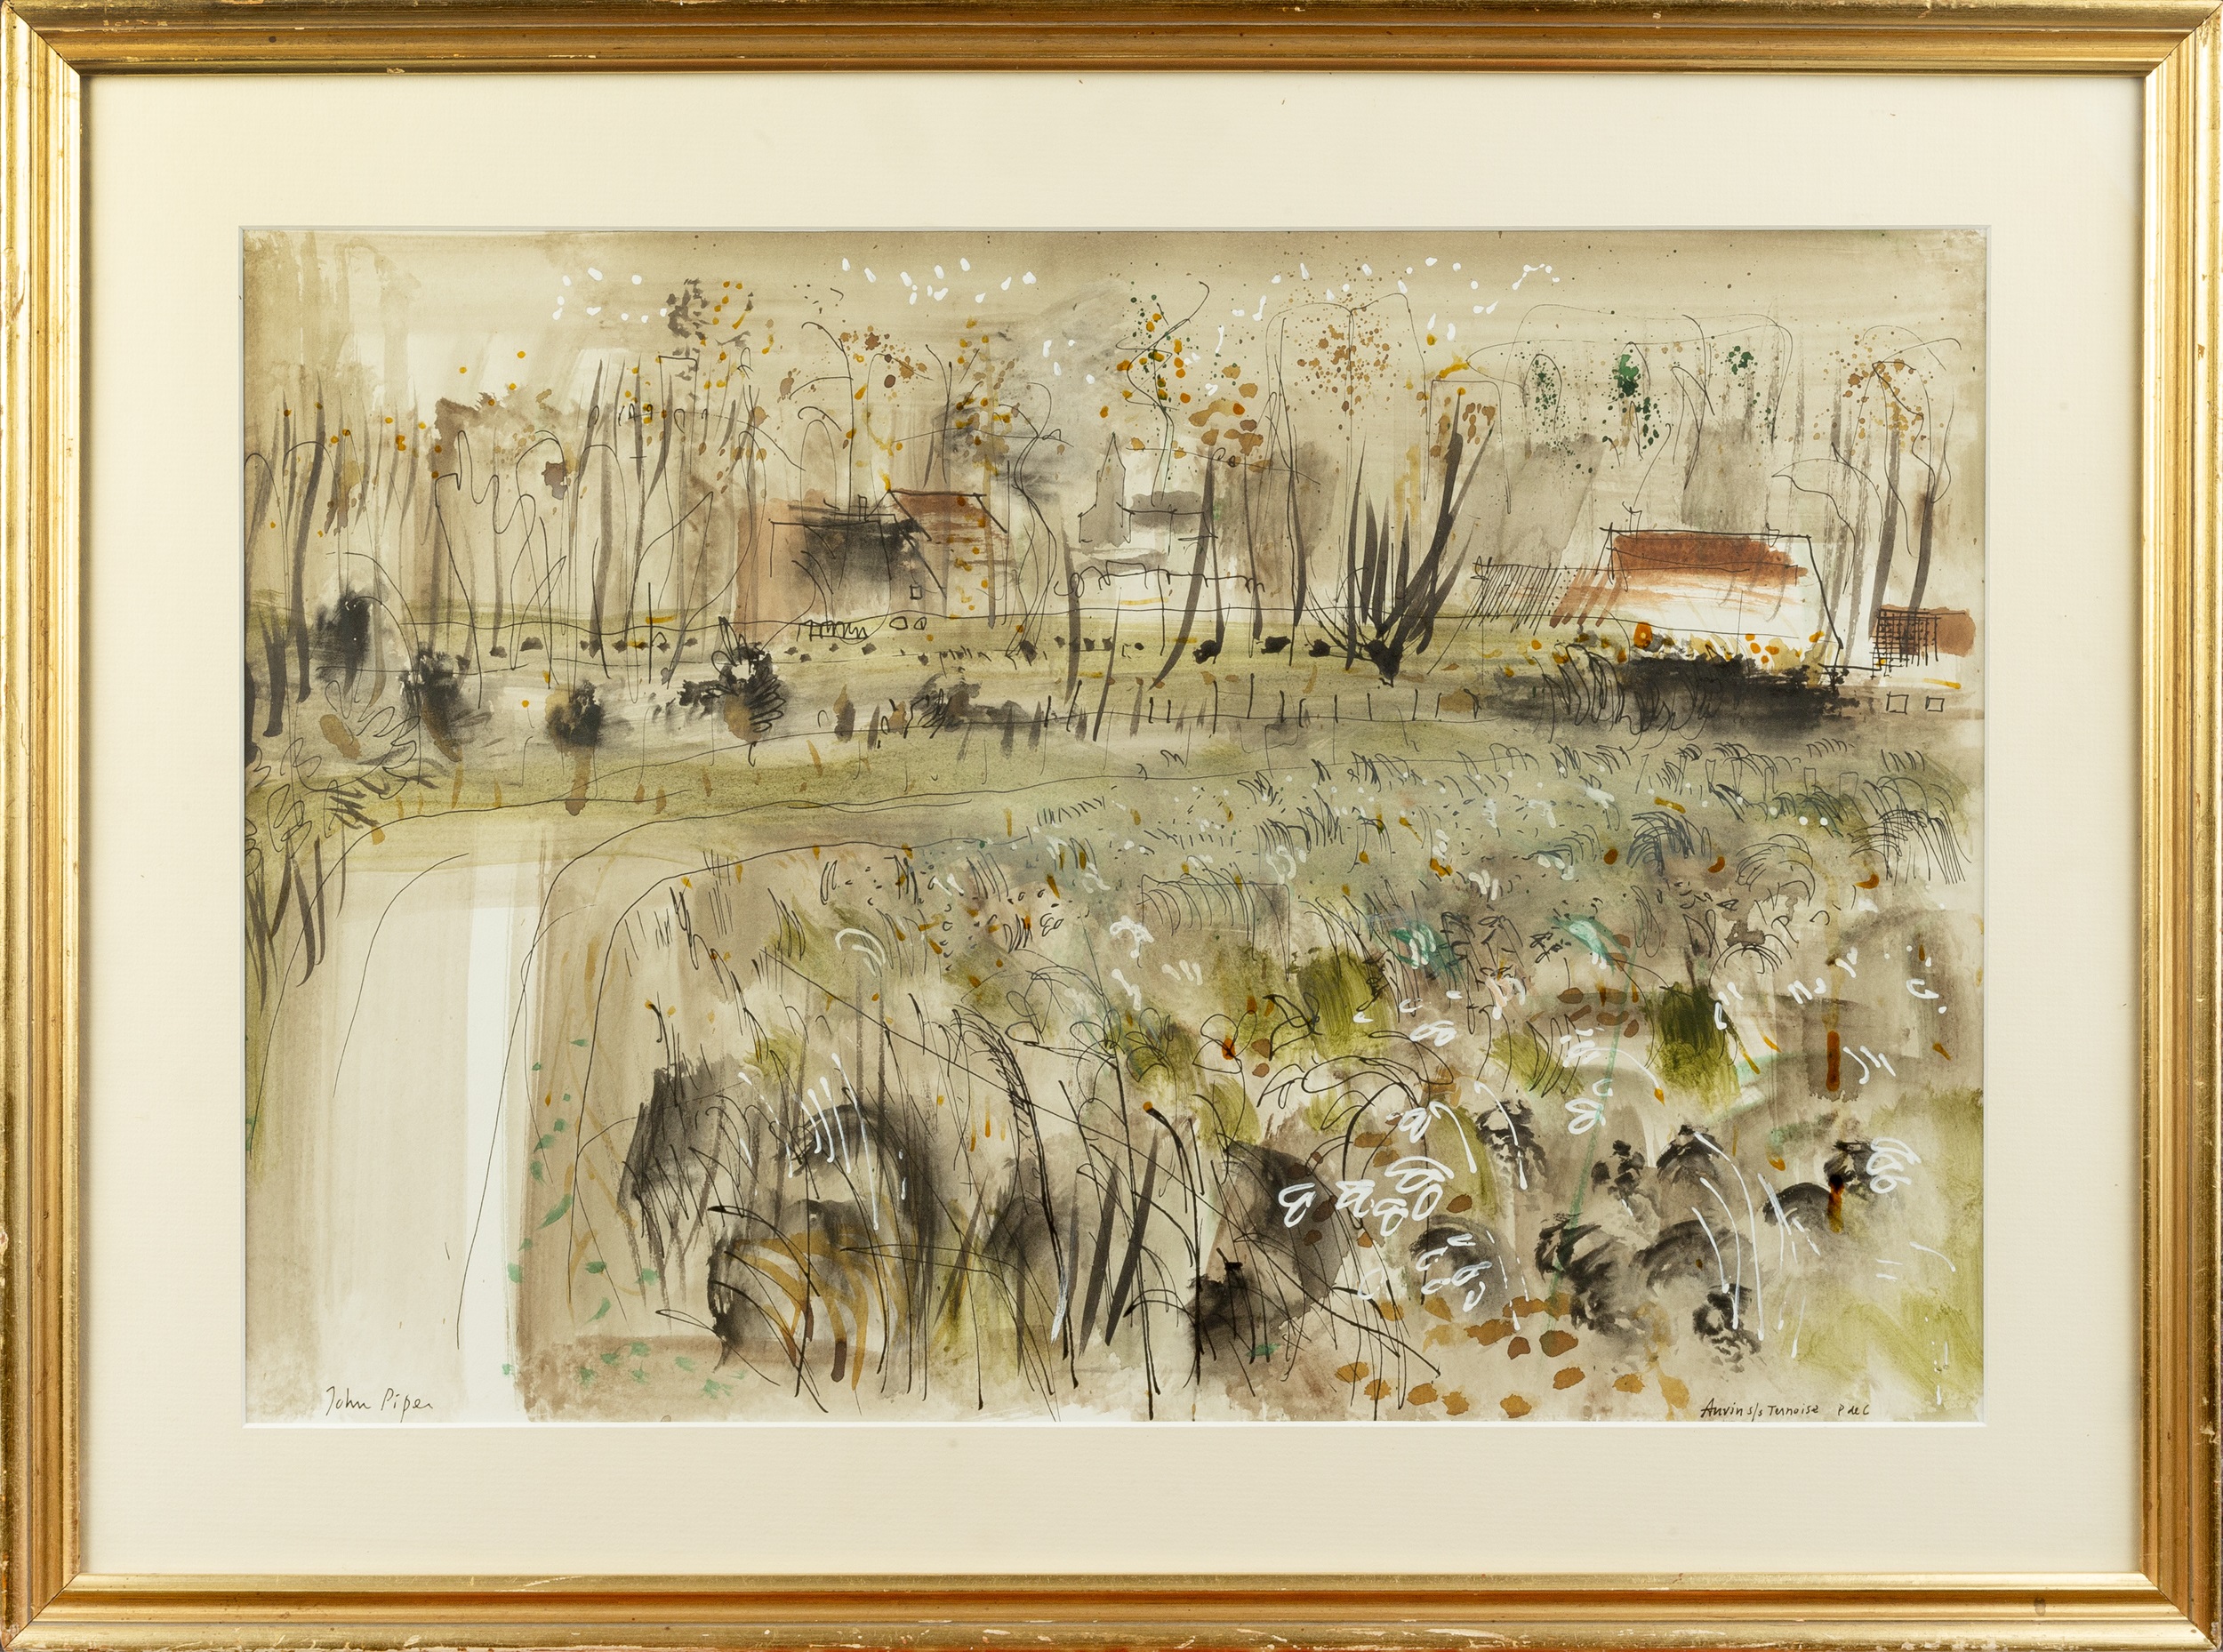 John Piper (1903-1992) French Landscape - Auvin su Ternoise, P de C signed (lower right) watercolour - Image 2 of 3